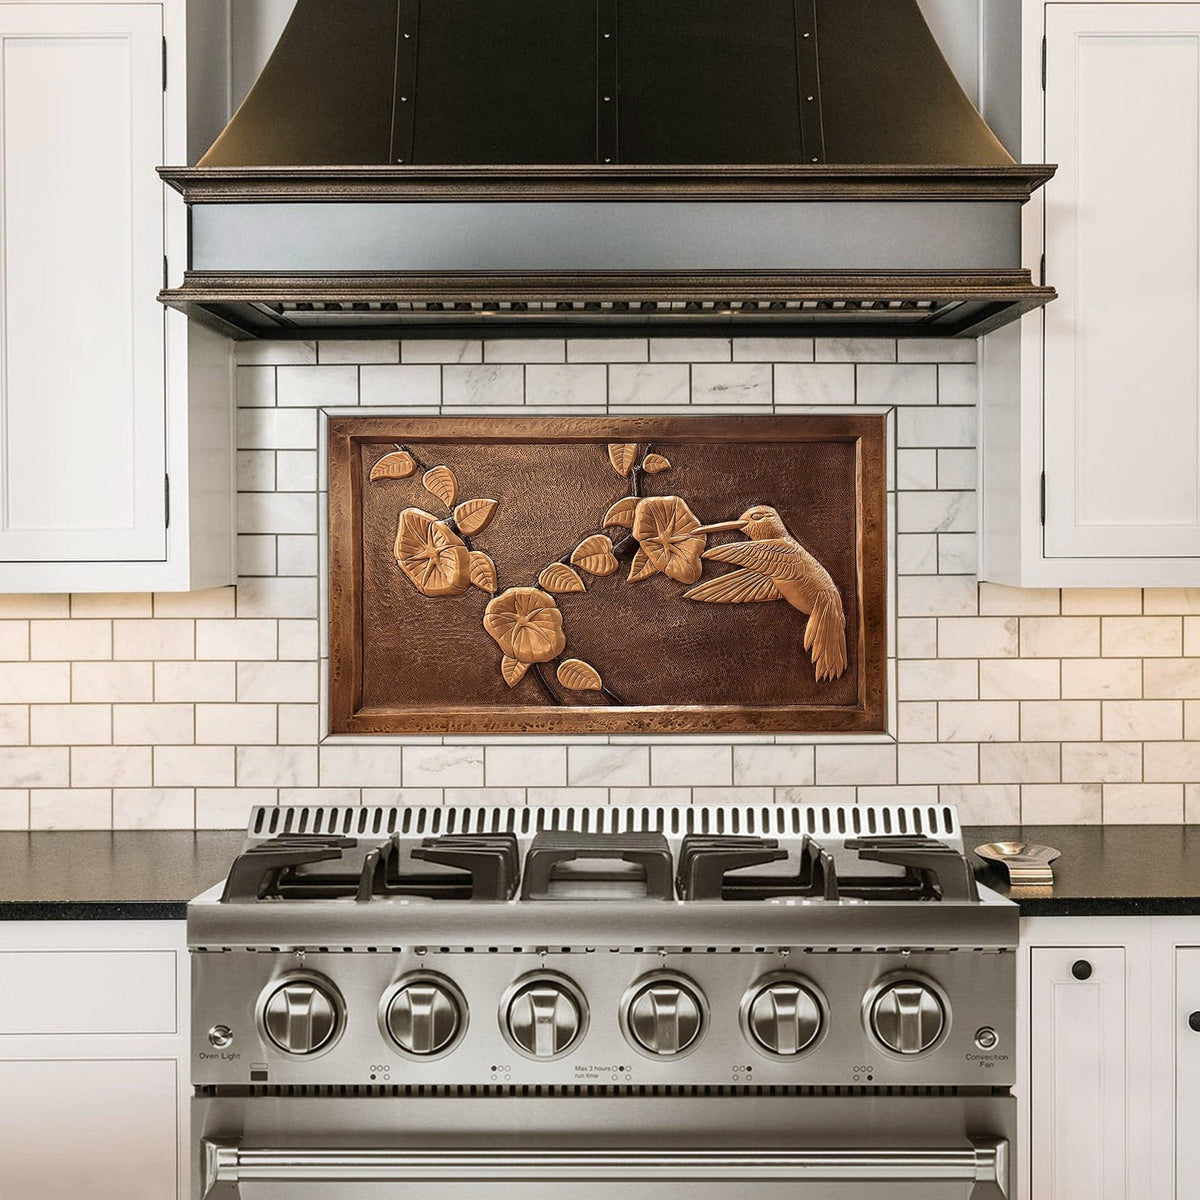 Fobest Handmade Copper Backsplash Kitchen Backsplash Wall Art Bird Design-BK5 - -Fobest Appliance